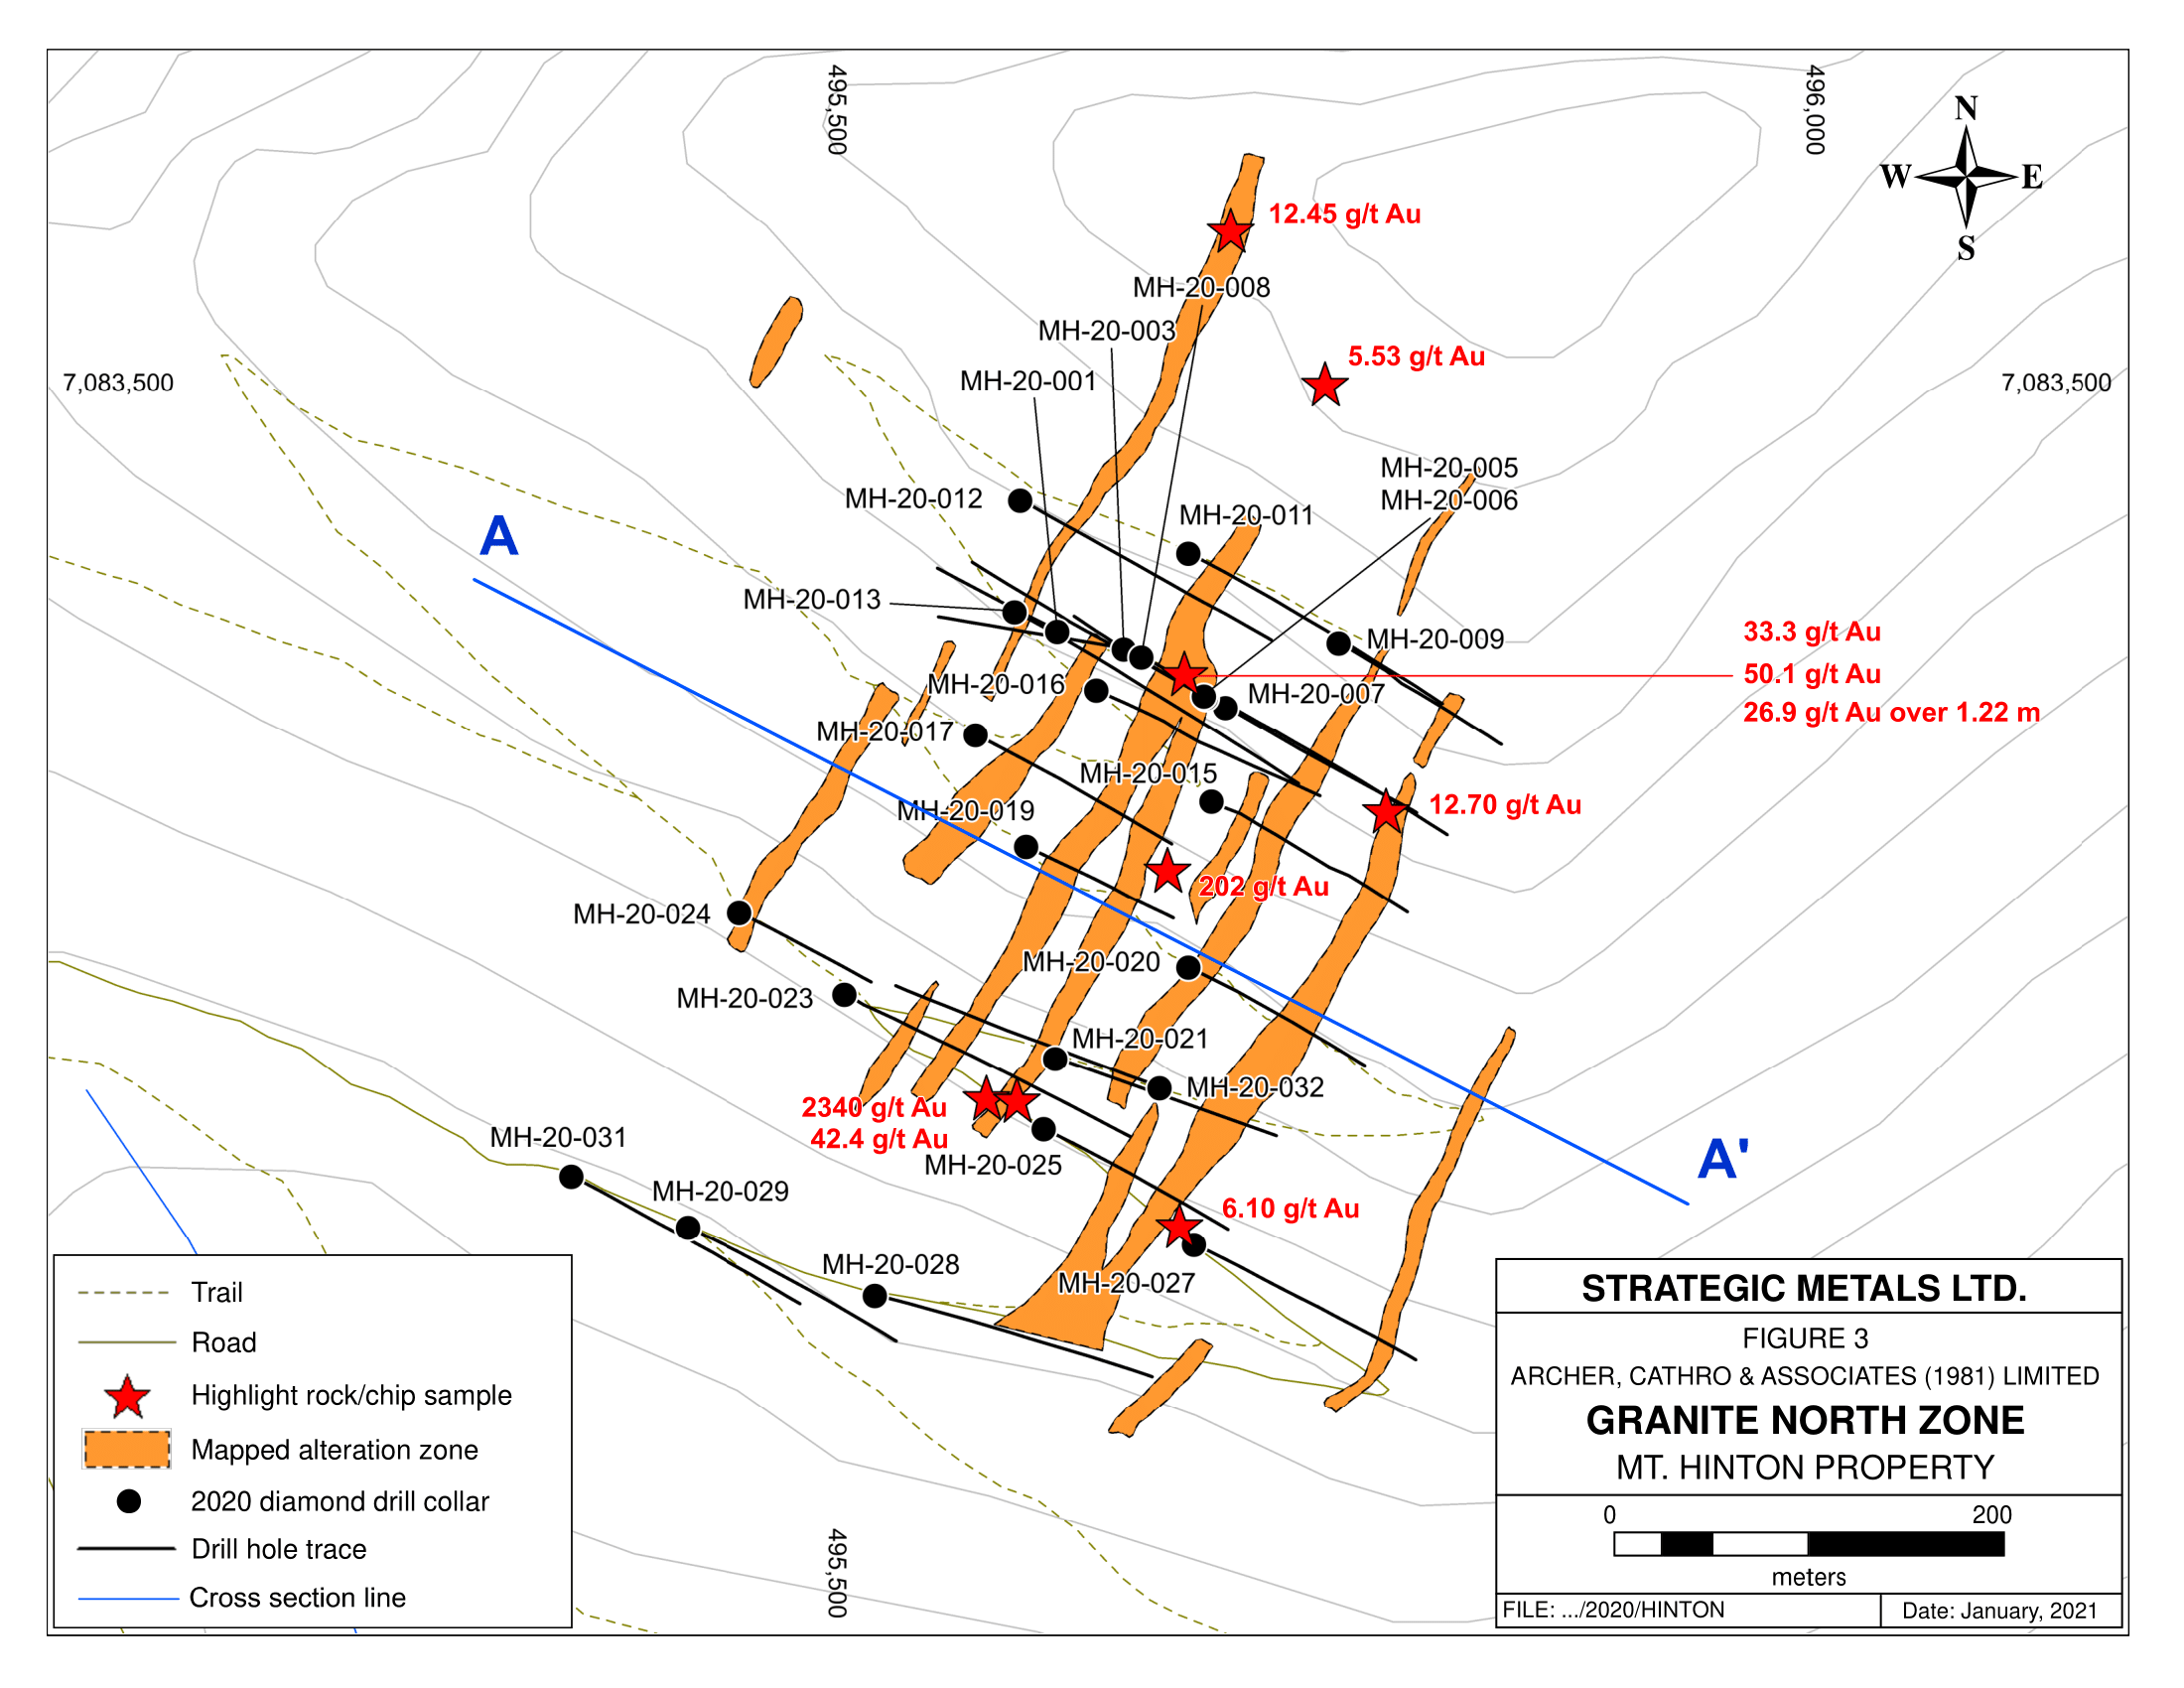 Granite North Zone plan view